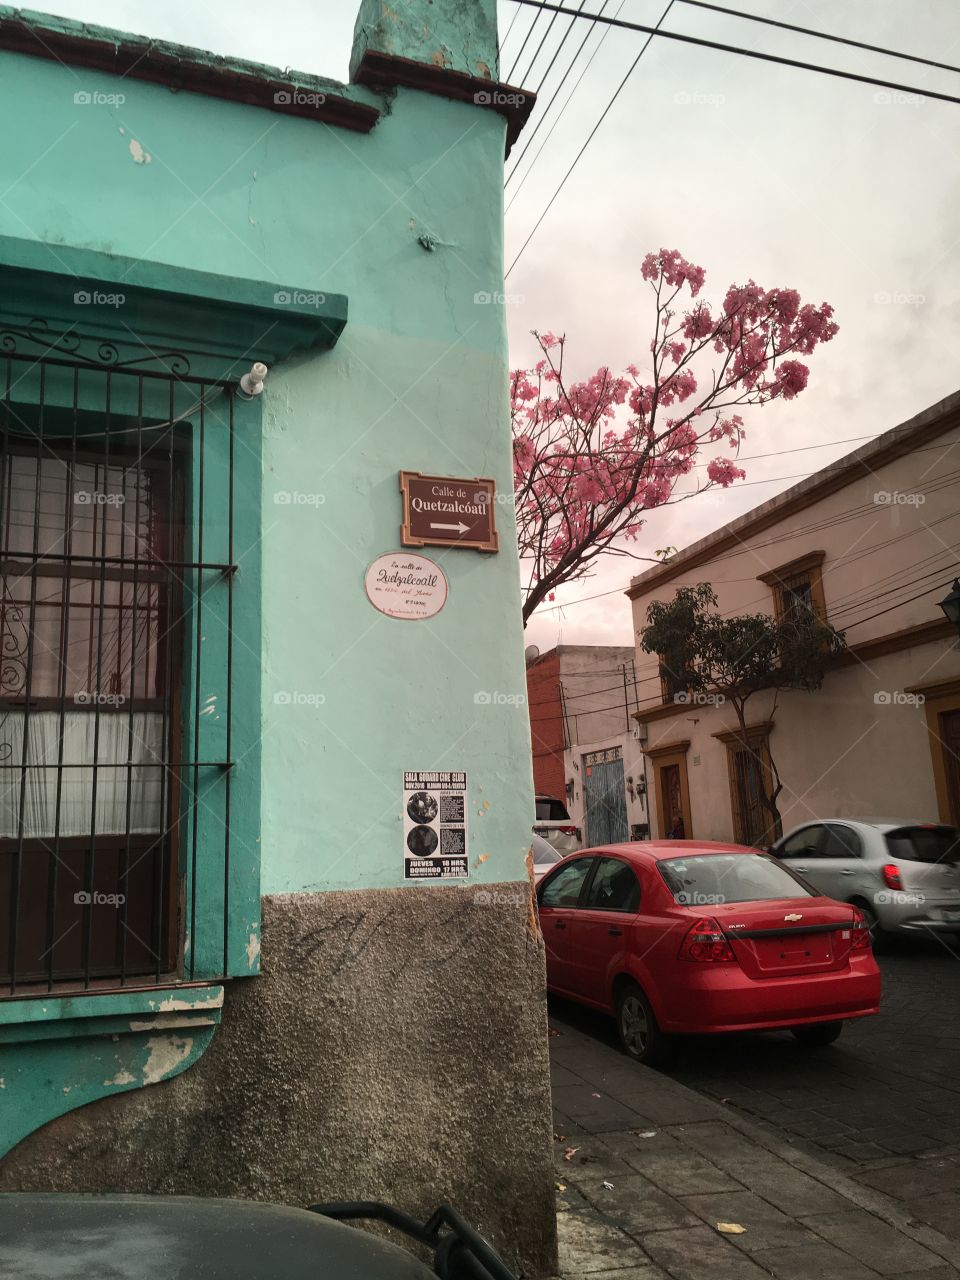 The Perfect Corner
Tinacco y Pillazzios 
Oaxaca